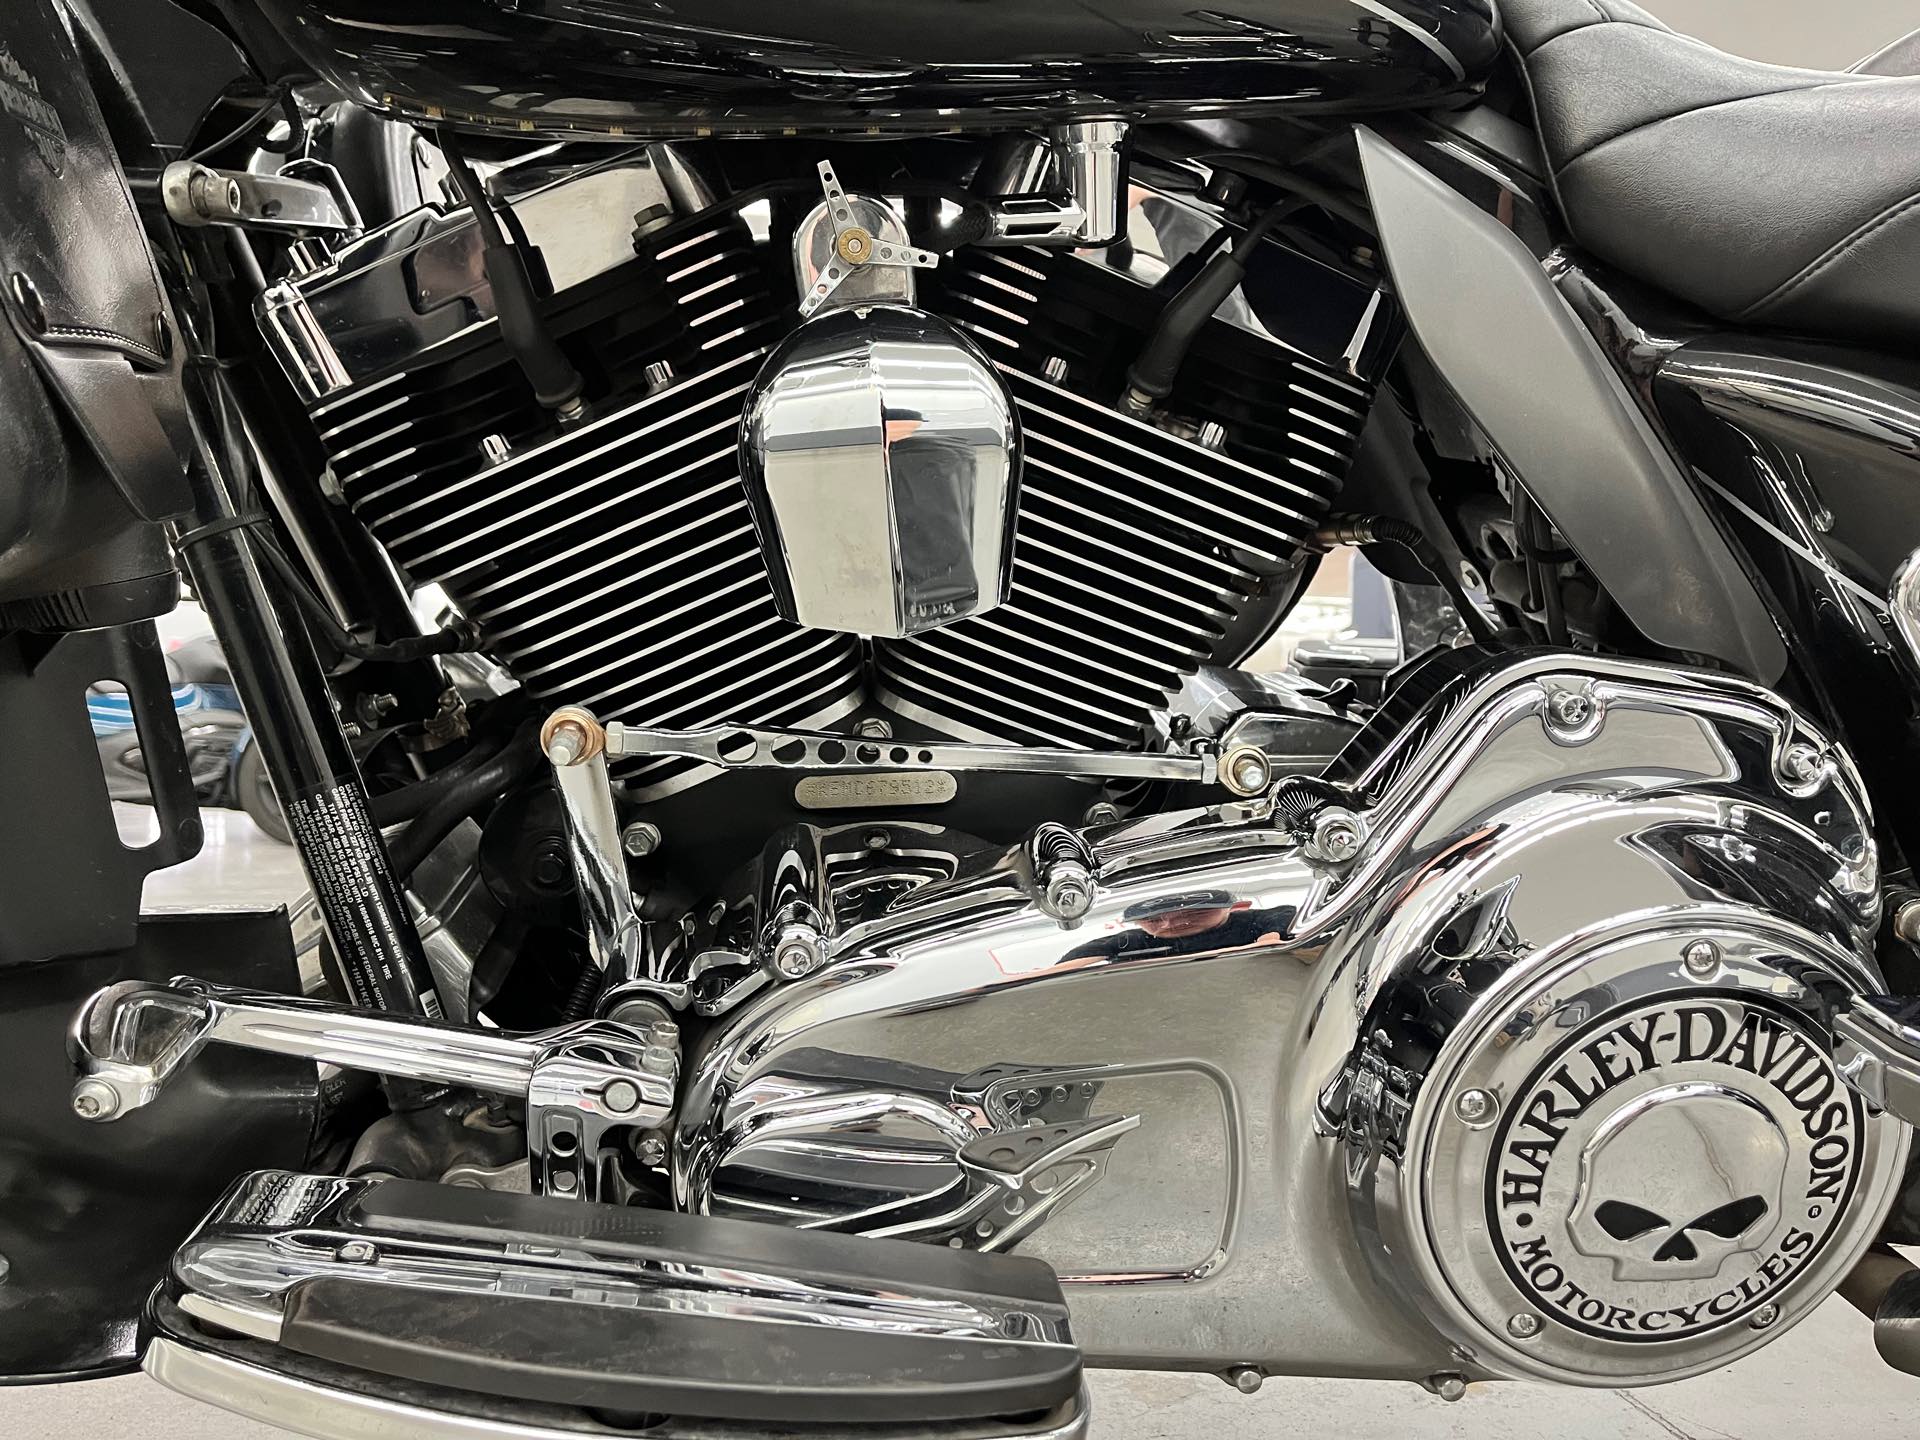 2012 Harley-Davidson Electra Glide Ultra Limited at Aces Motorcycles - Denver